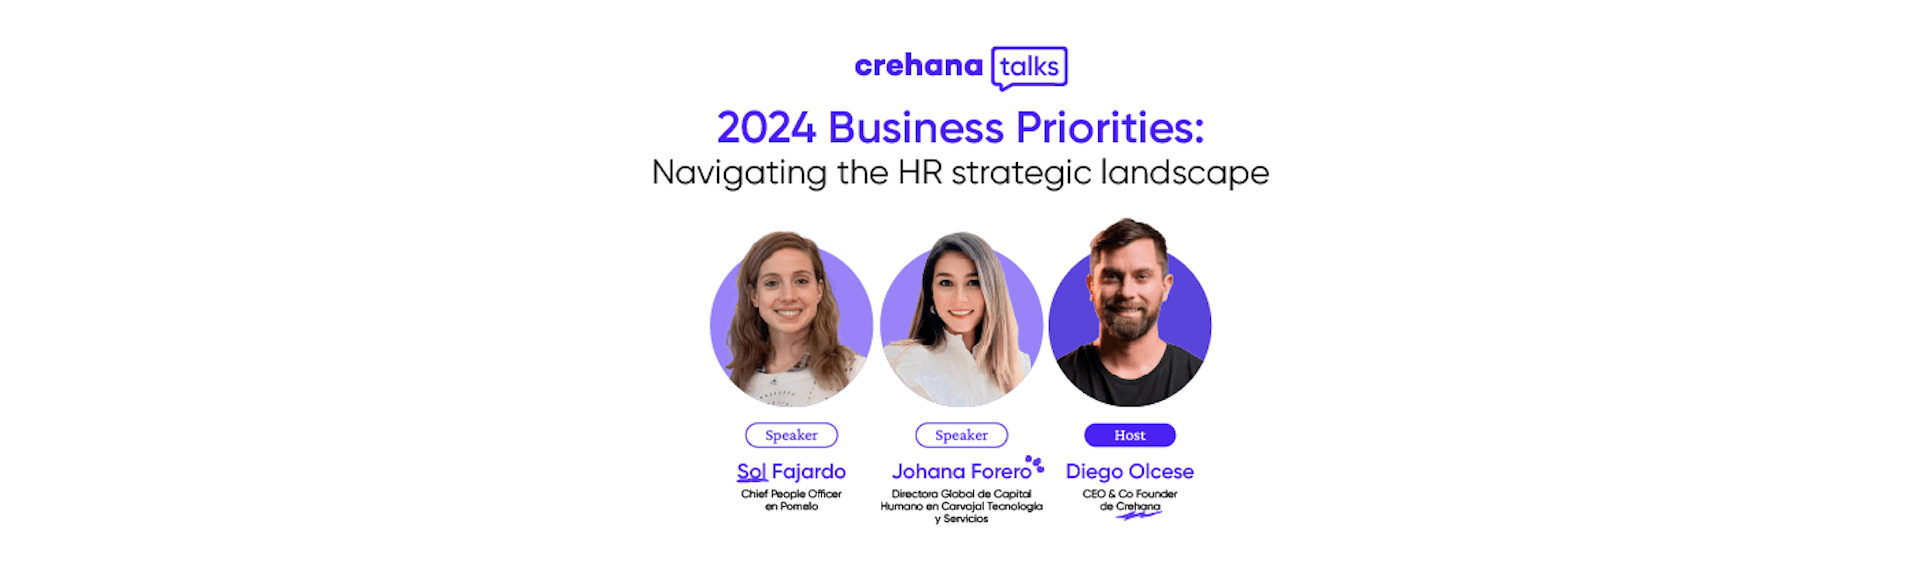 Crehana Talks: 2024 Business Priorities